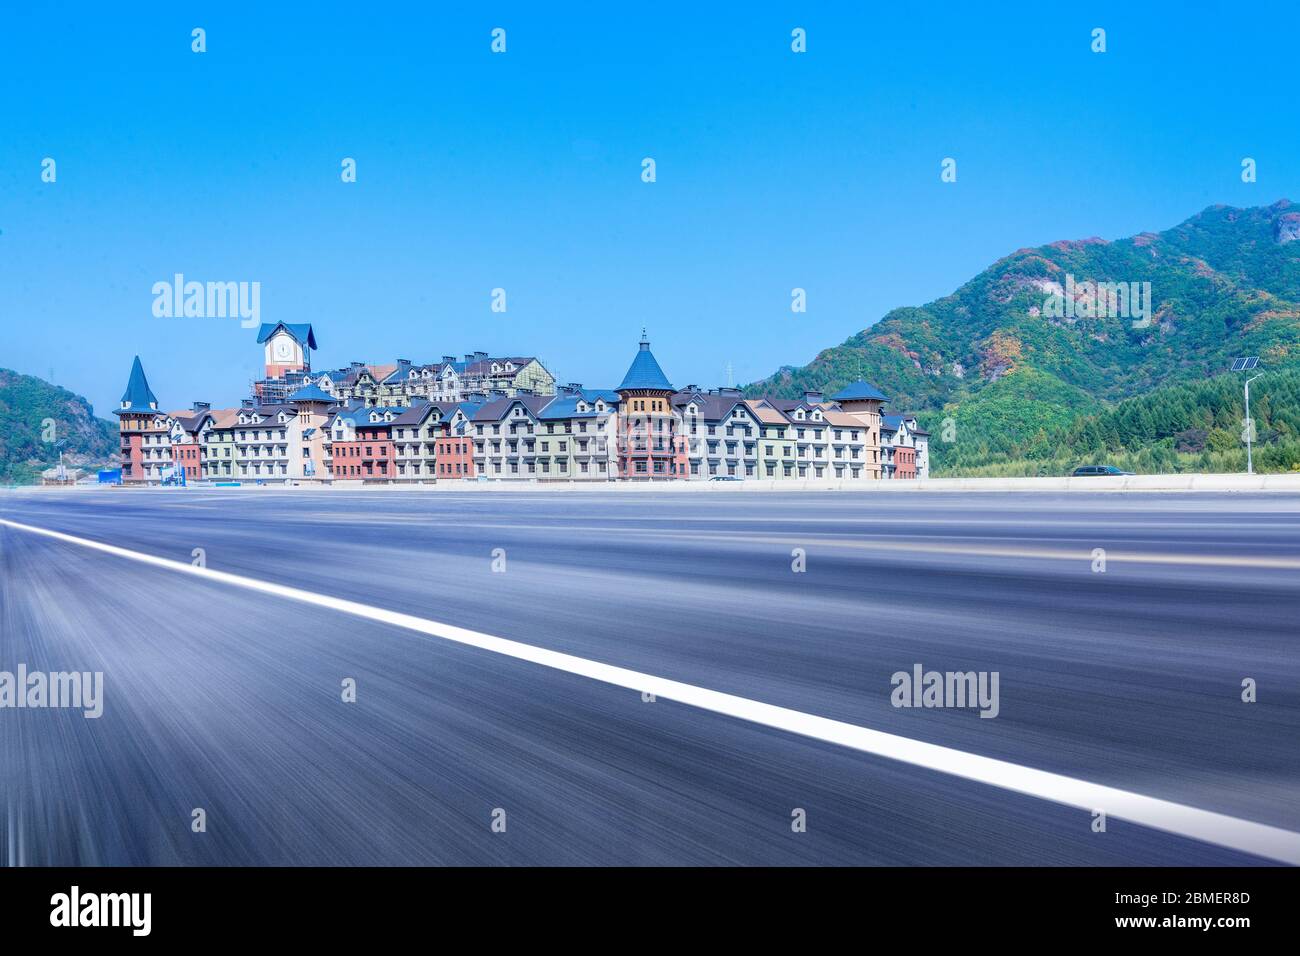 European castle building and asphalt highway under blue sky mountain. Stock Photo